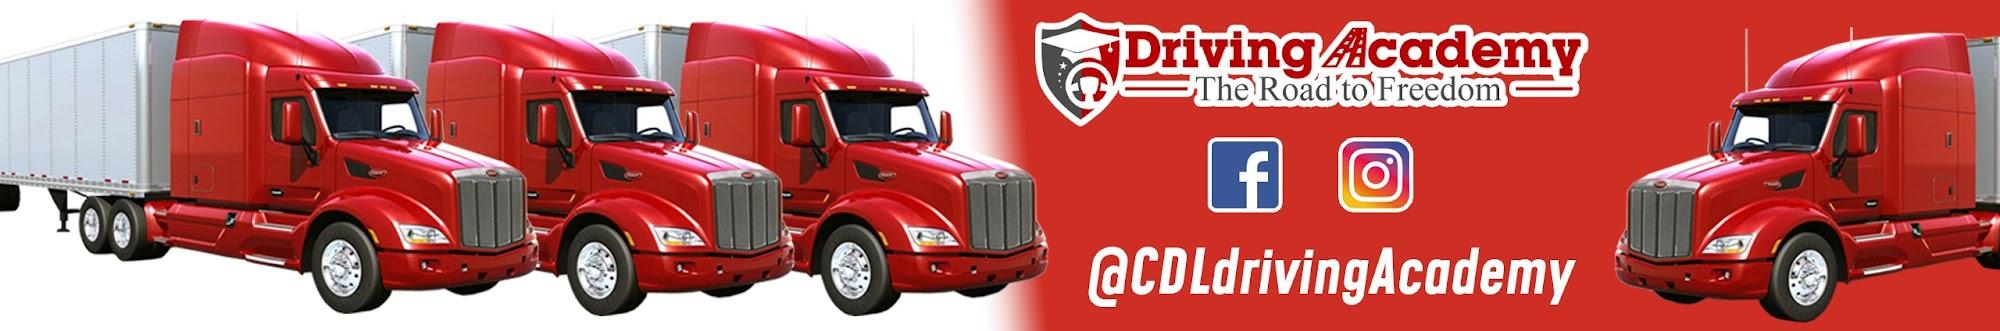 Driving Academy | CDL Truck Driving School